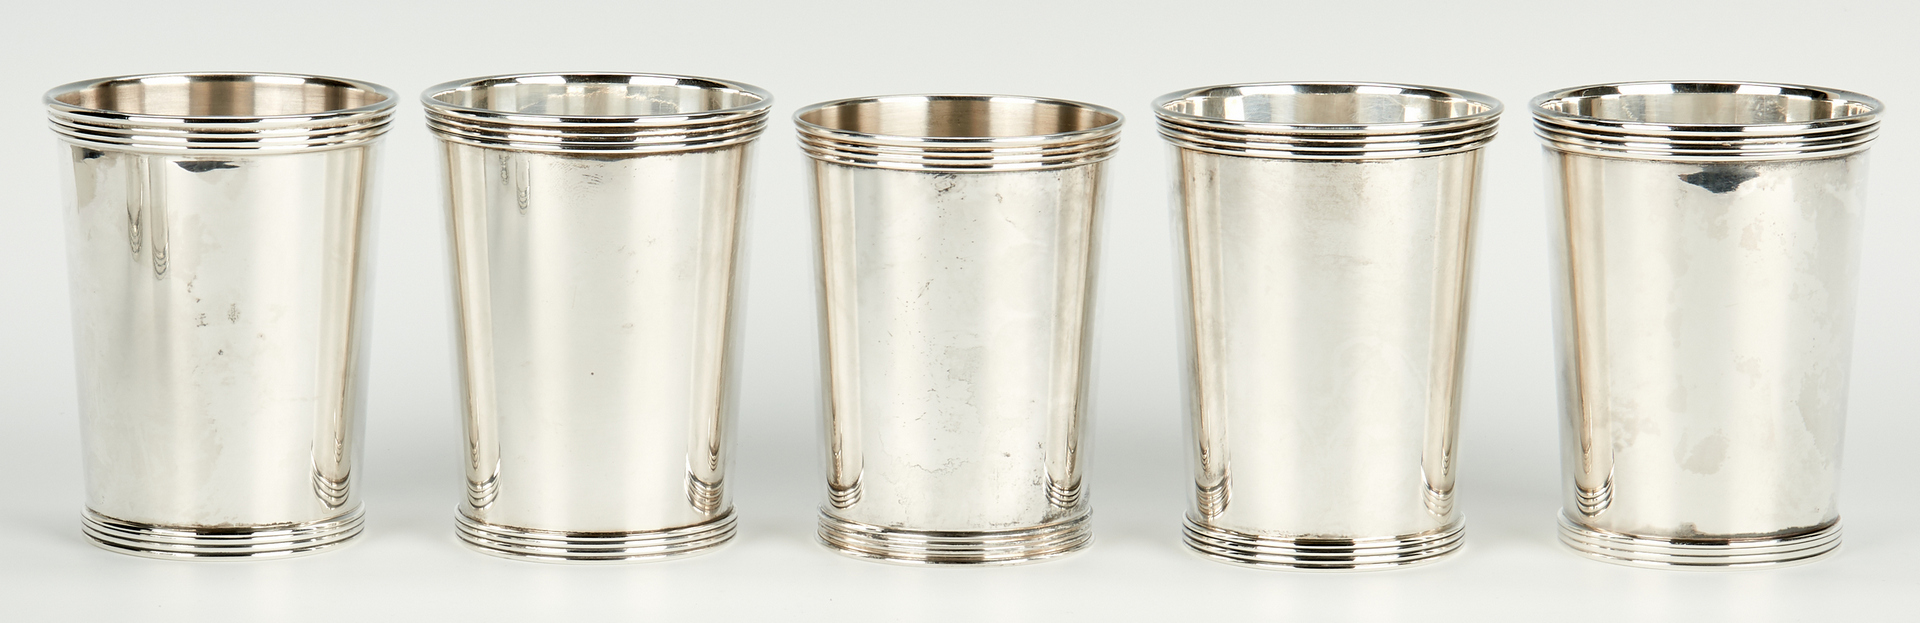 Lot 796: 9 International Silver Mint Julep Cups